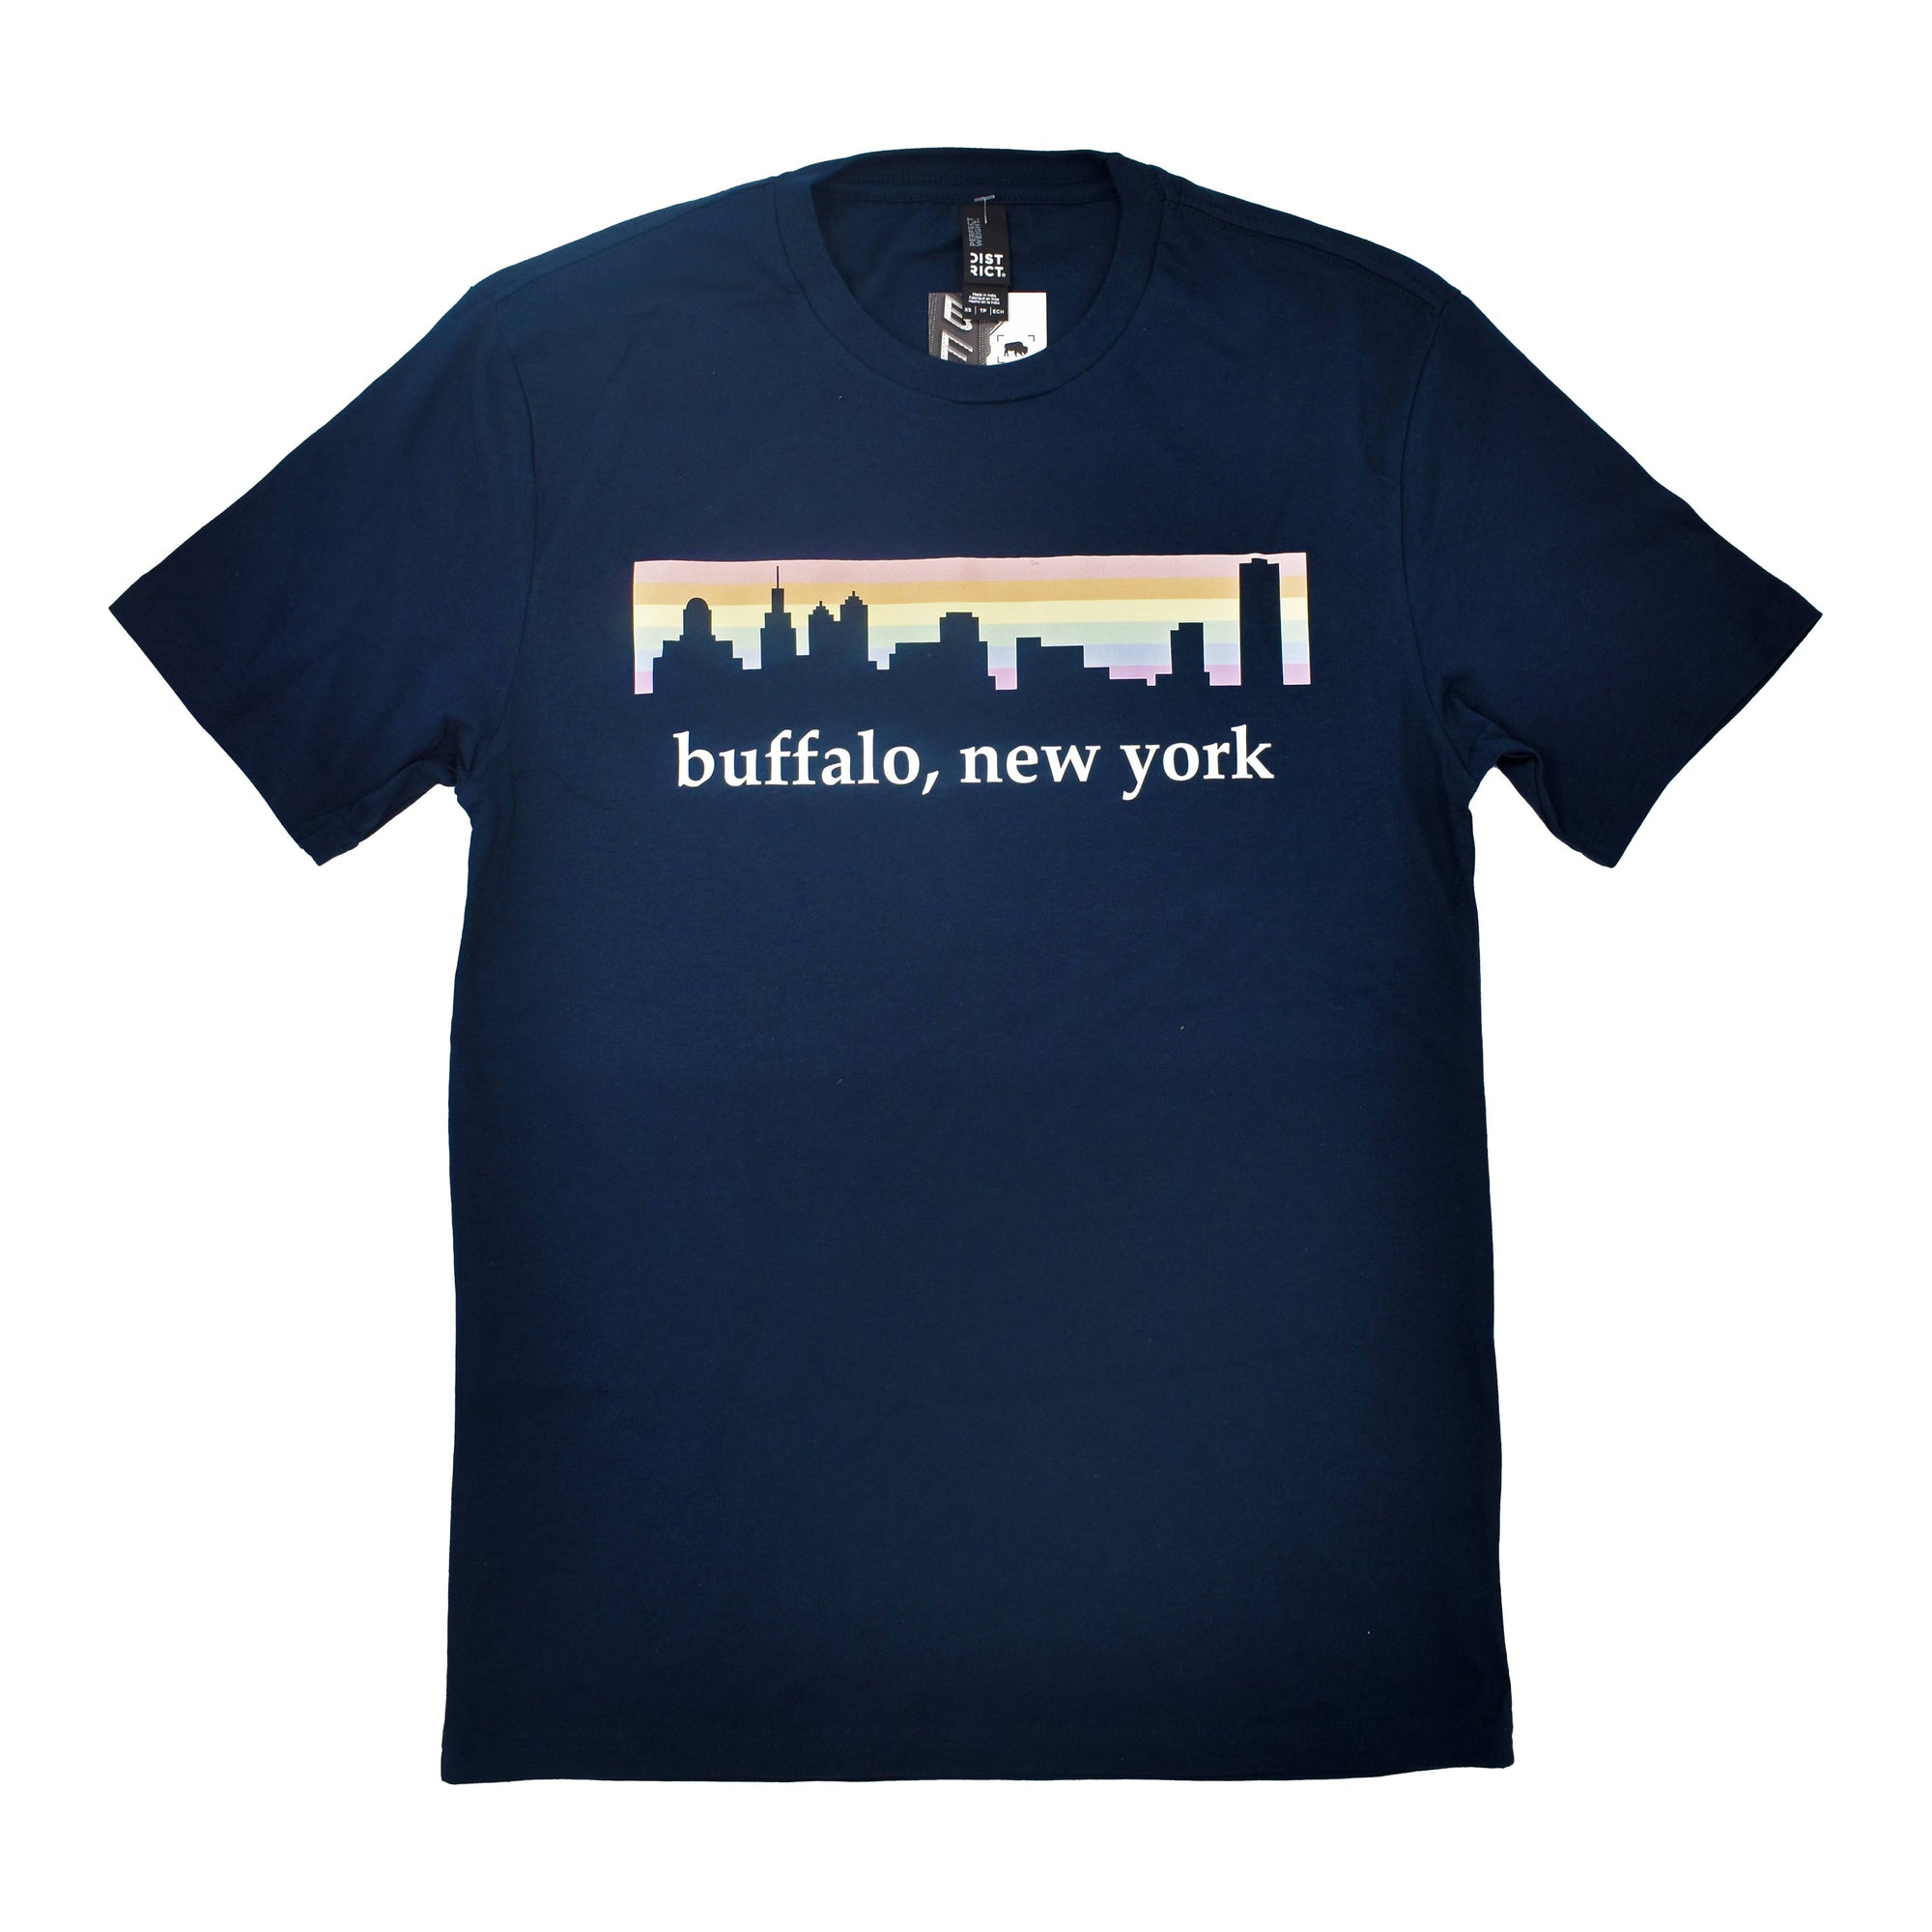 bflo store Buffalo, New York Pastel Rainbow Navy Short Sleeve Shirt